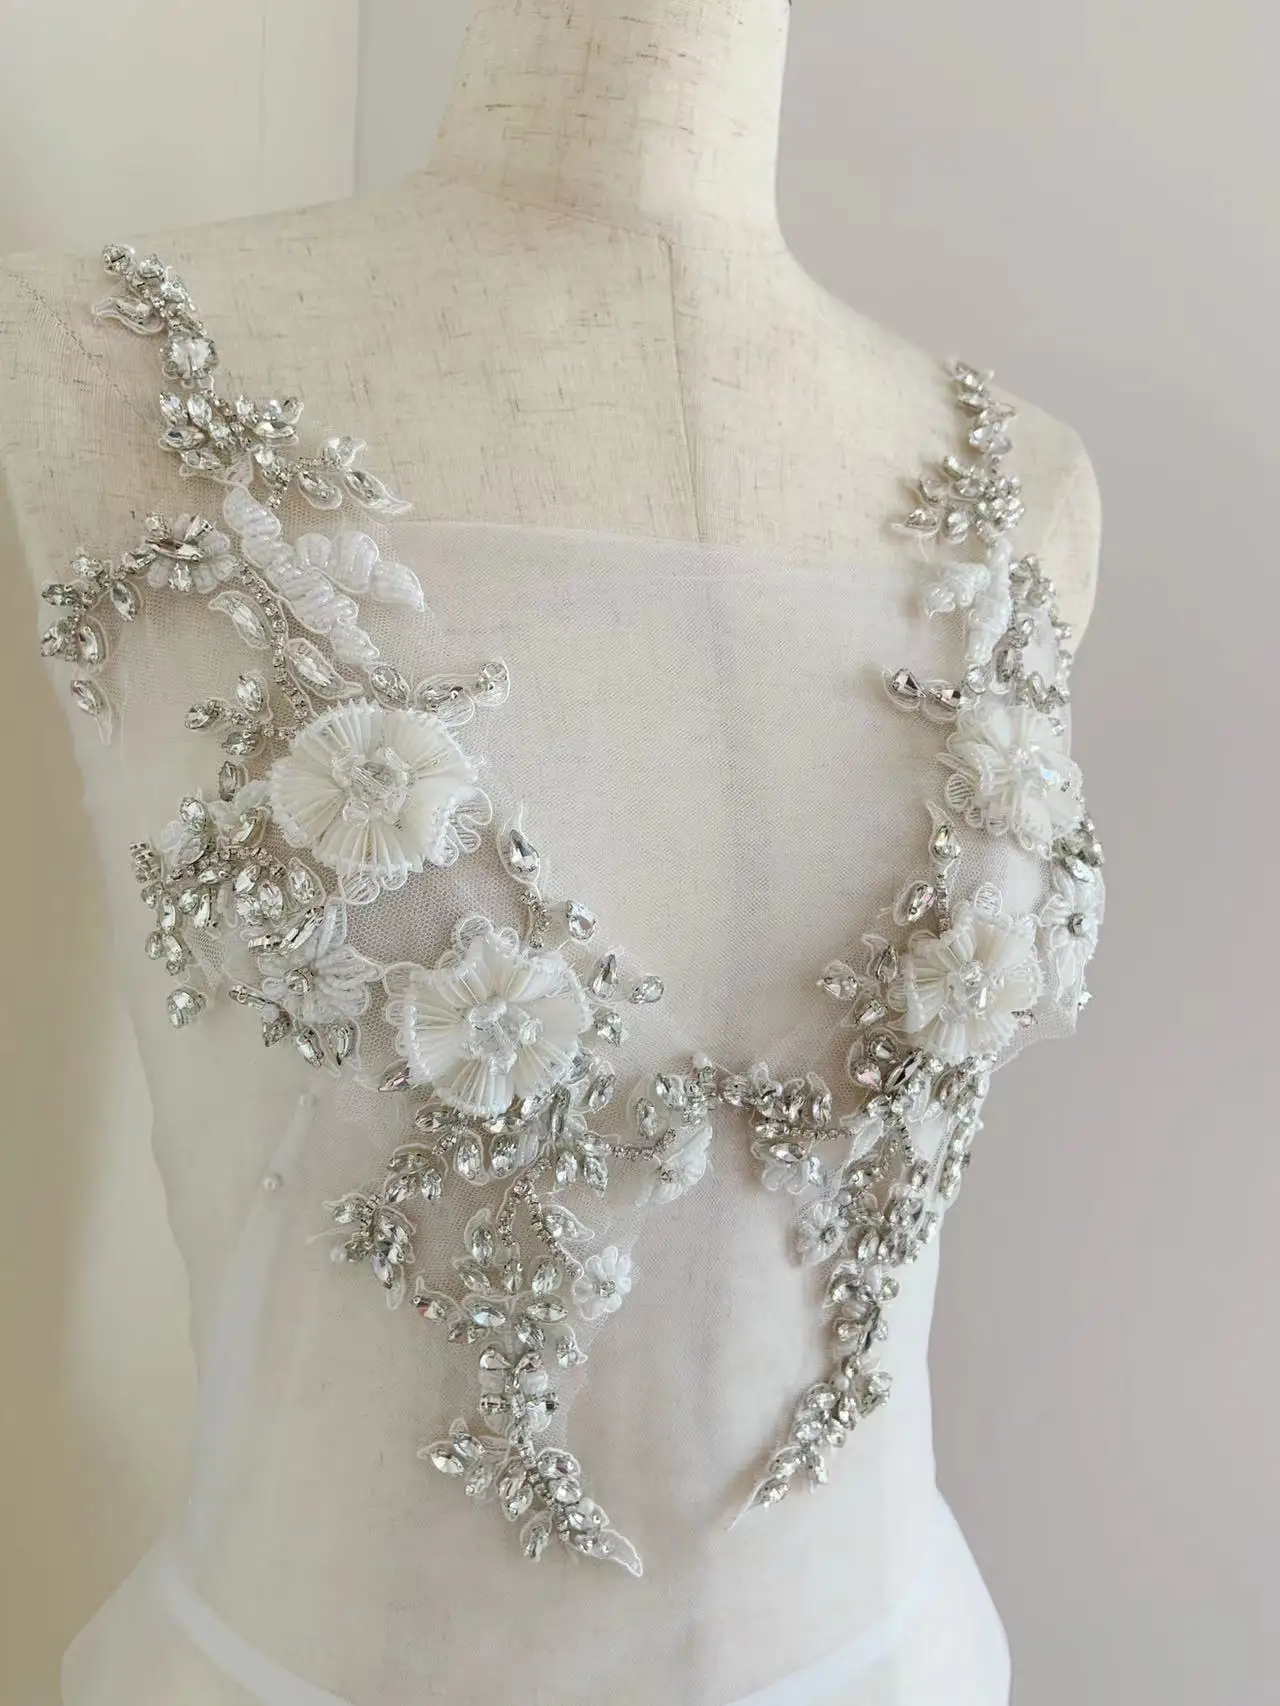 1 Pair Heavy Rhinestone Applique 3D White Flower Elegant Crystal Bodice Patch for Couture,Bridal Sash,Wedding Headpiece